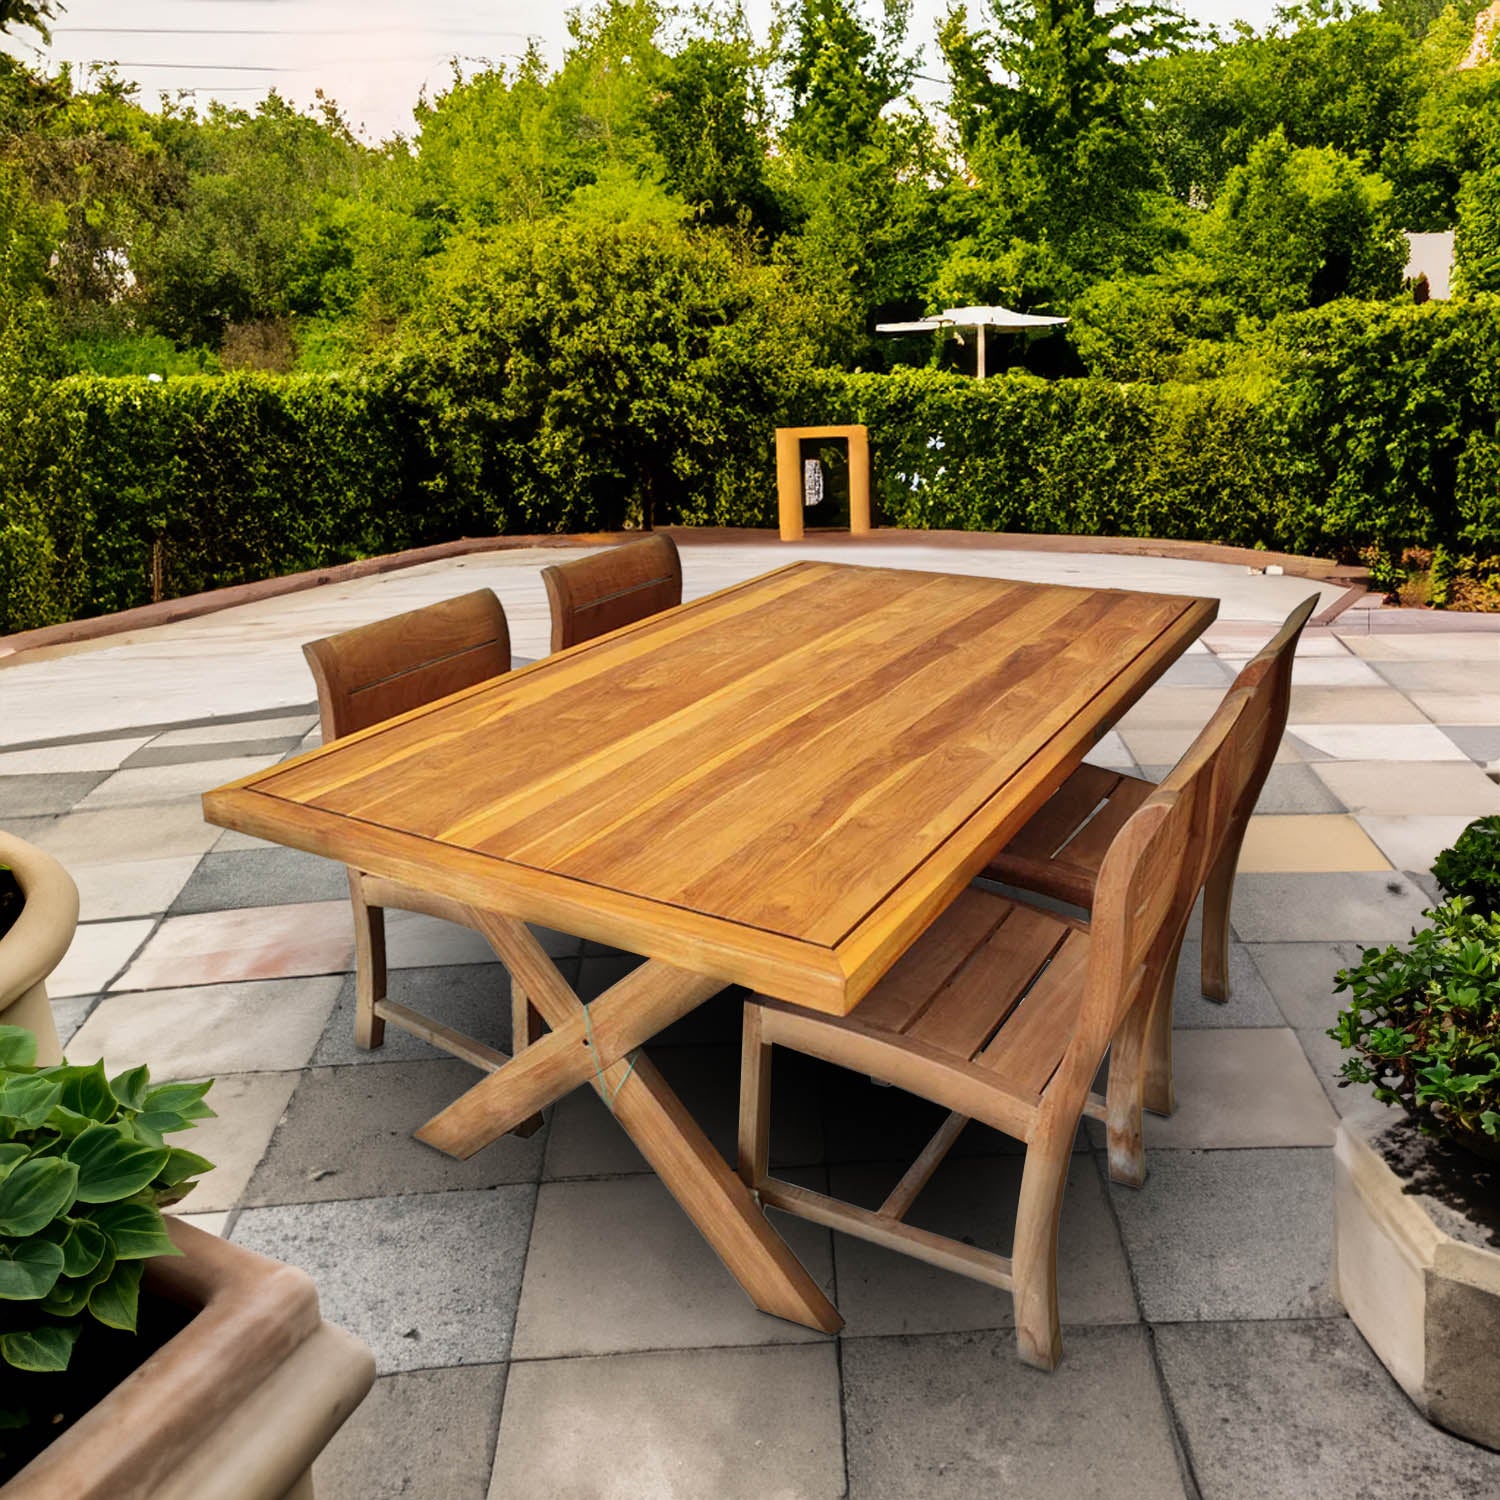 Rectangular Dining Table Teak Wood 110X160X75Cm